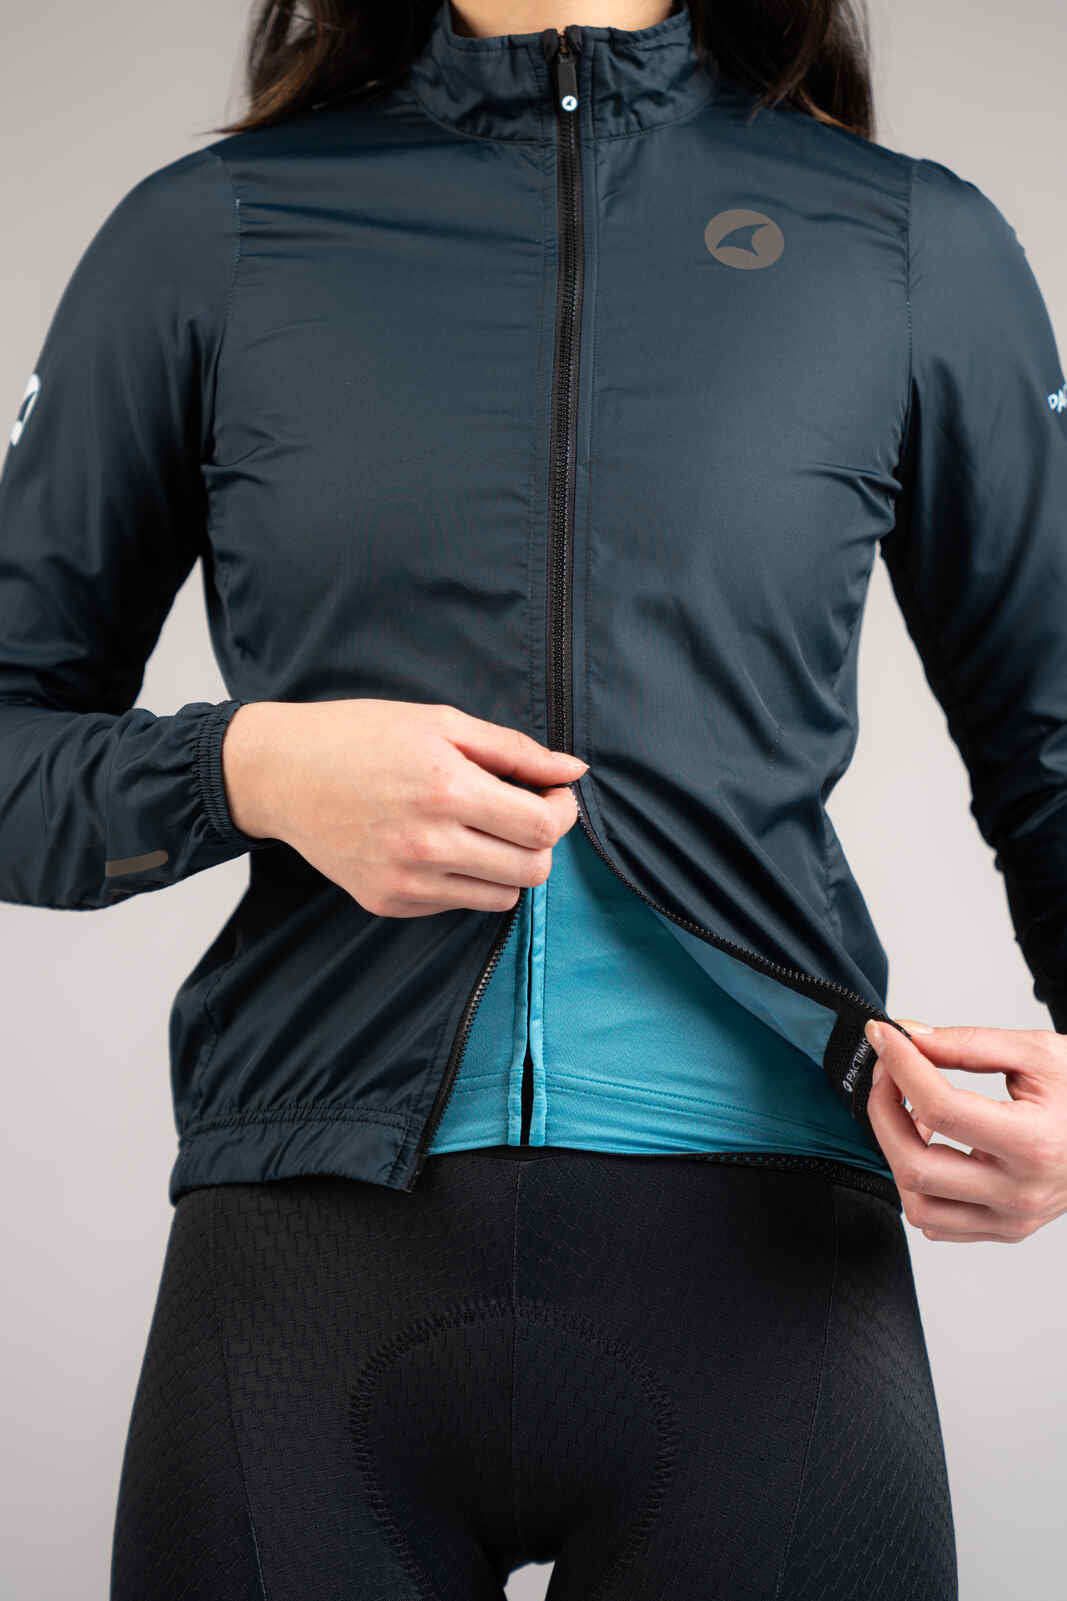 Women's Navy Blue Packable Cycling Wind Jacket - Two-Way Zipper